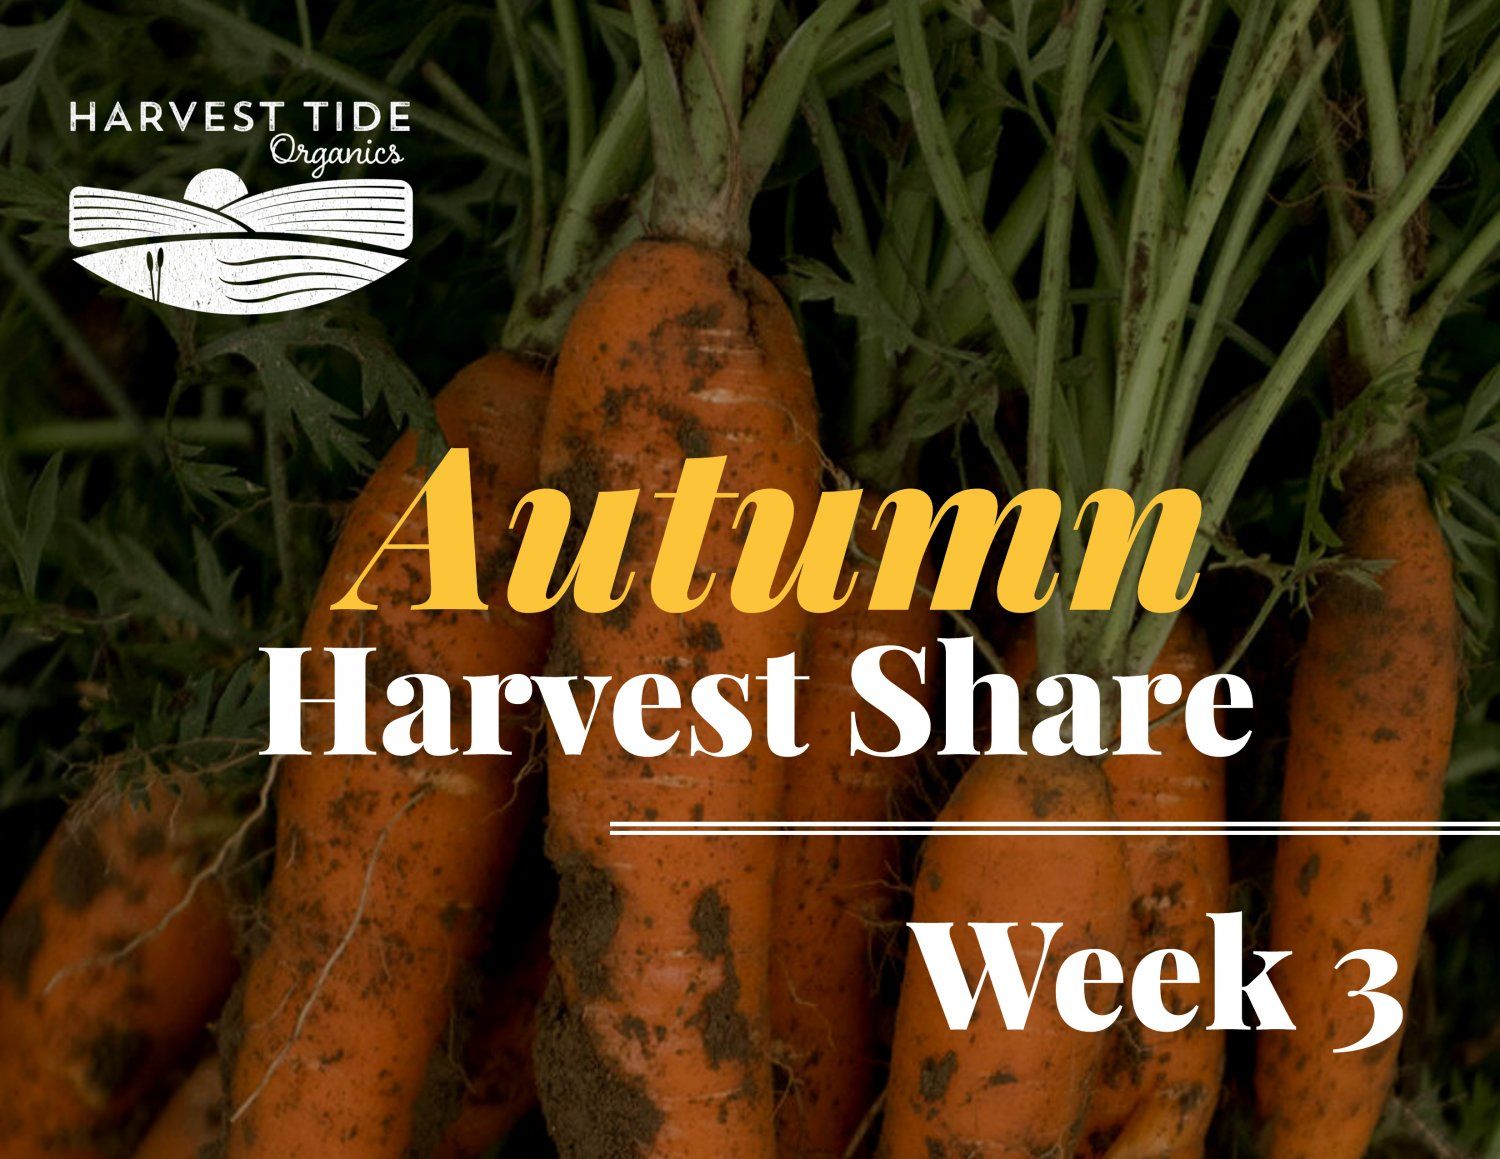 Next Happening: Autumn Harvest Share - Week 3